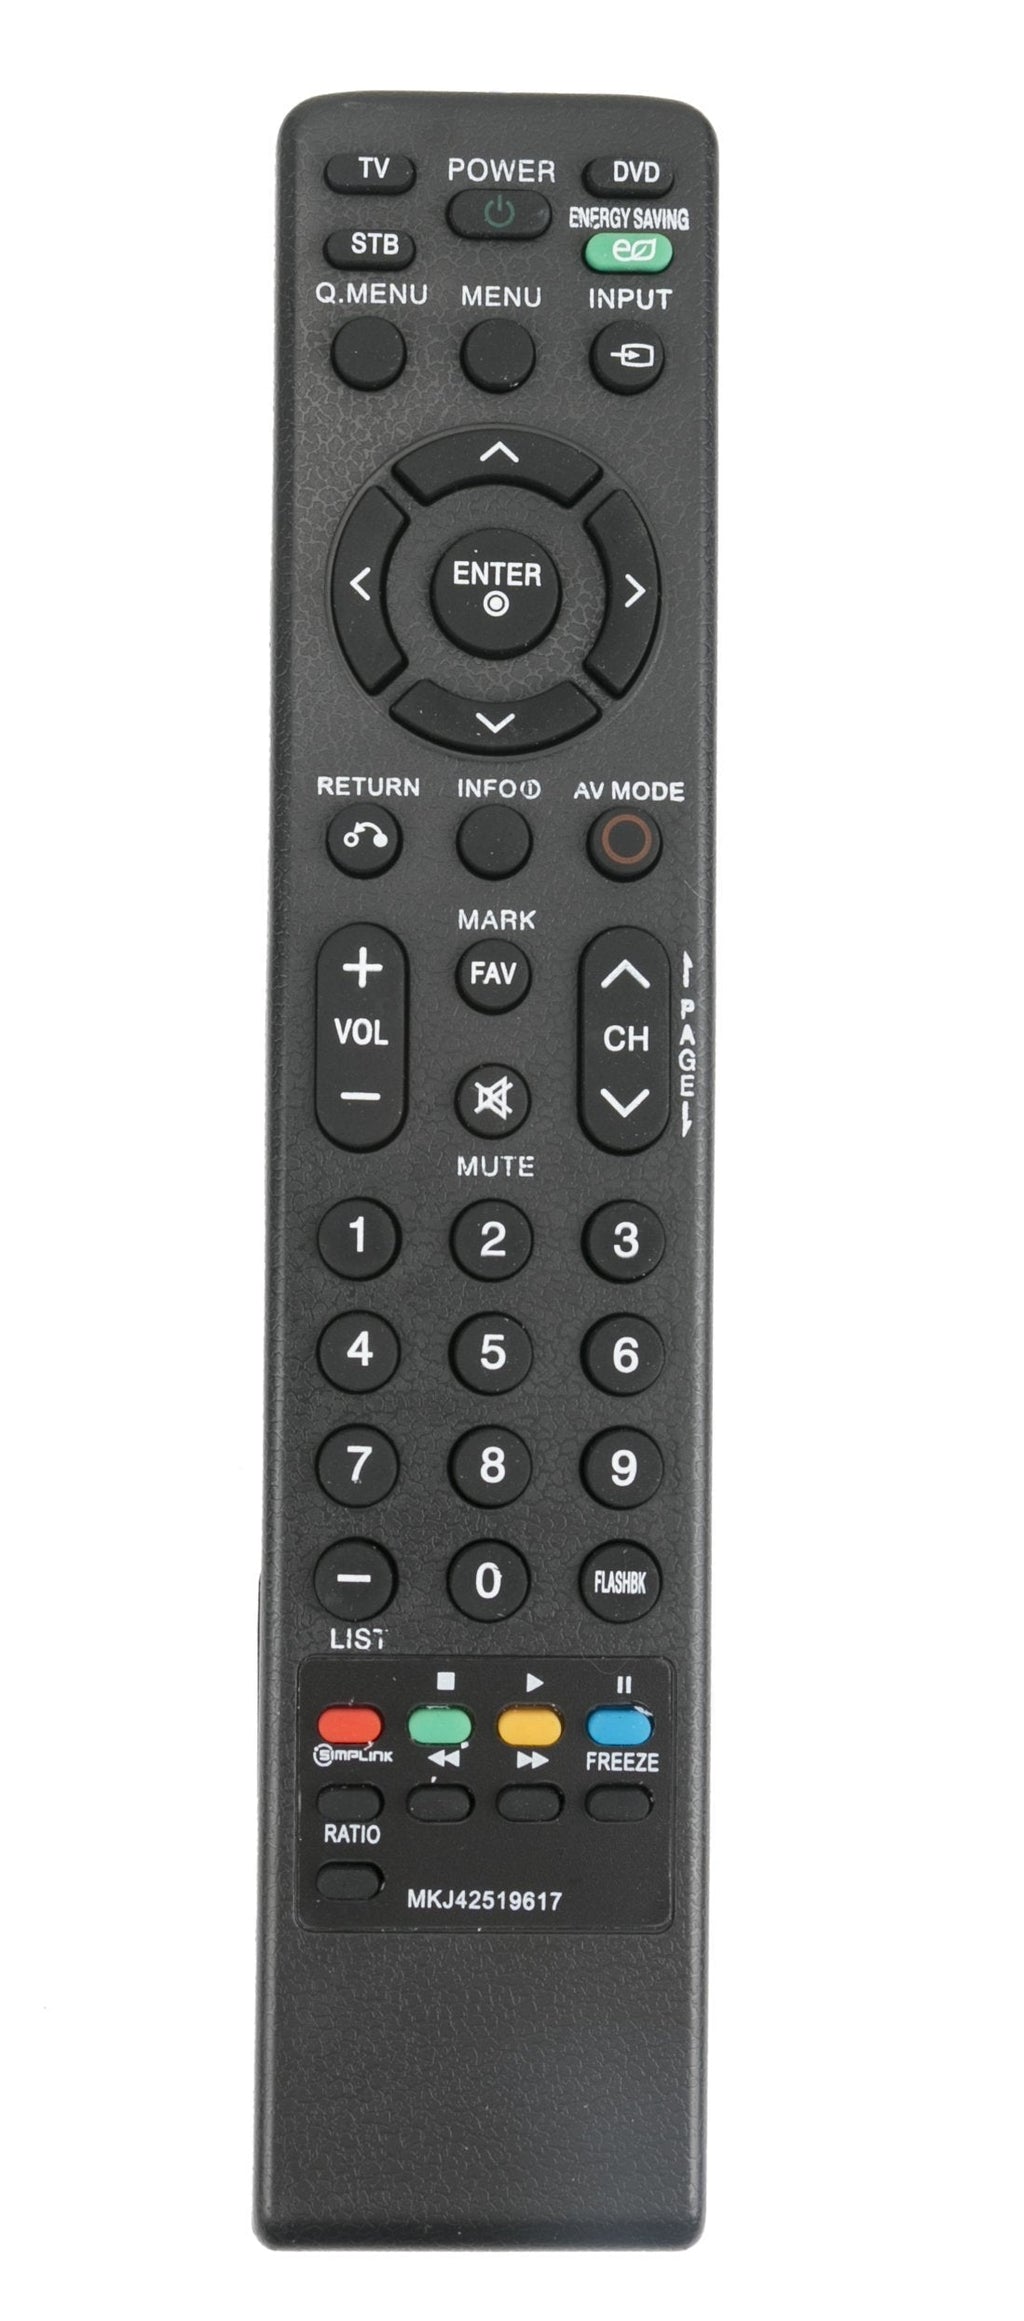 MKJ42519617 Replace Remote Control Suit for LG TV 42PQ10 42PQ12 42PQ20 42PQ30 42PQ60 50PQ10 50PQ12 50PQ20 50PQ30 50PQ30C 50PQ31 60PS10 60PS11 60PS11UA 60PS70 60PS80 - LeoForward Australia